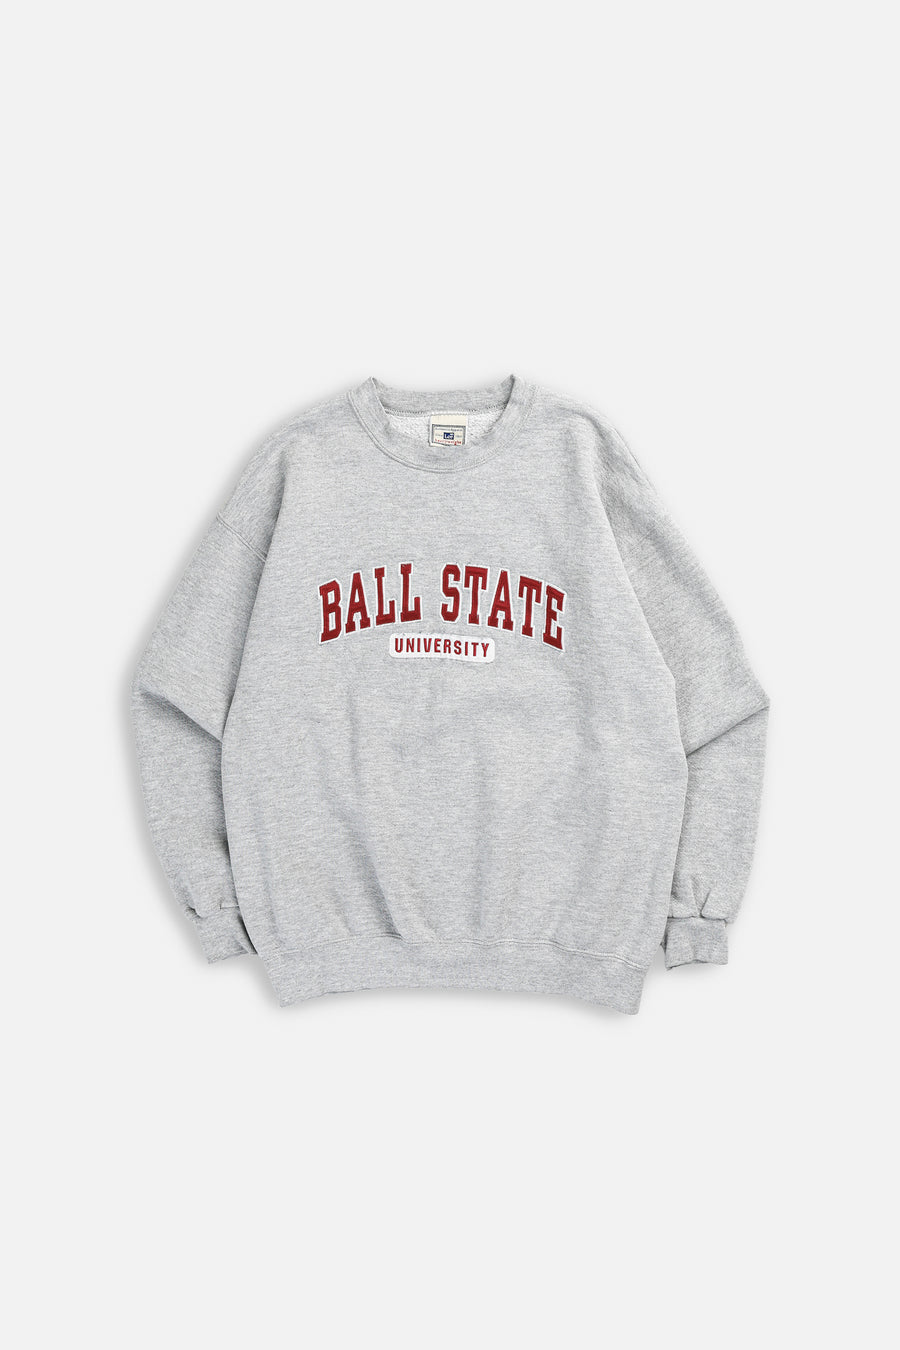 Vintage Ball State University Sweatshirt - M